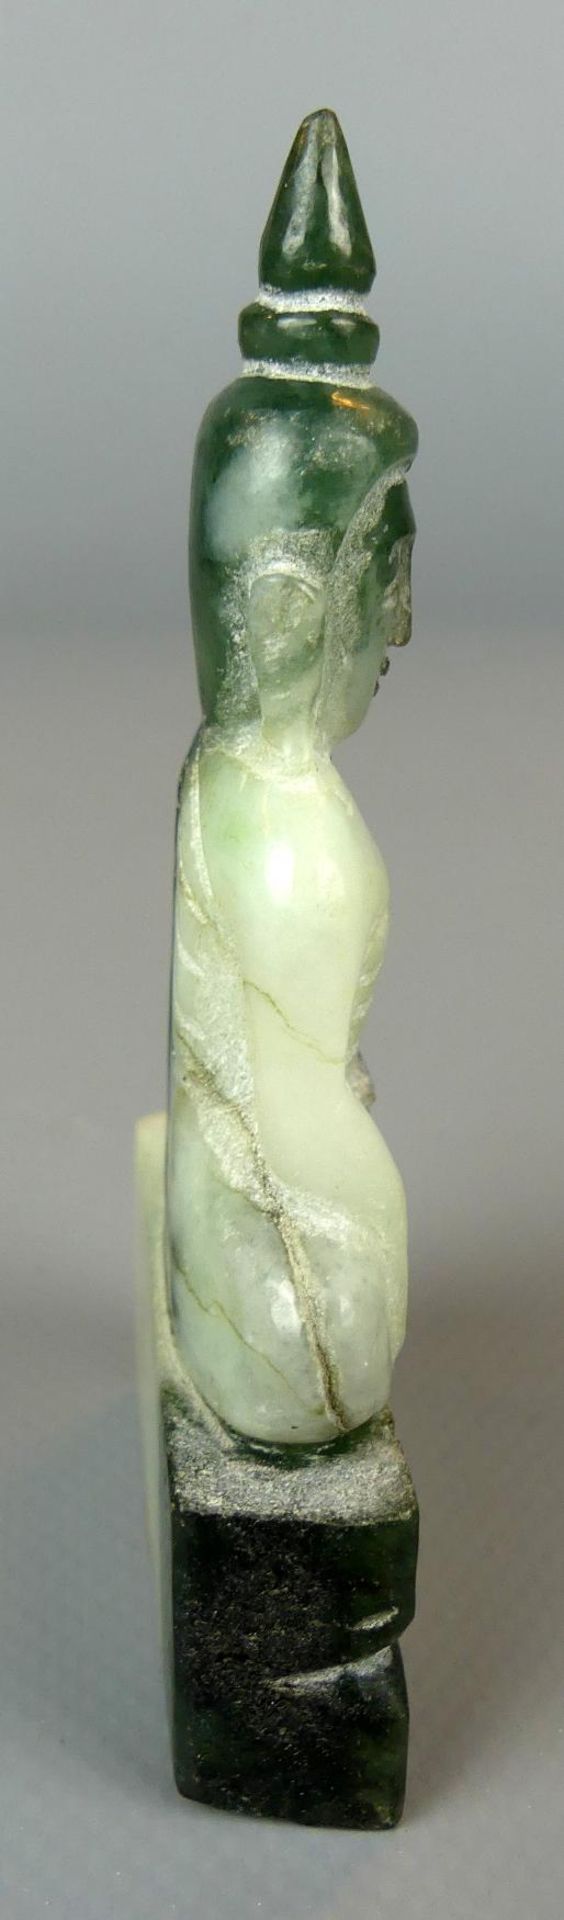 Sitzender Buddha, Jade, H. ca. 9,5 cm - Image 3 of 3